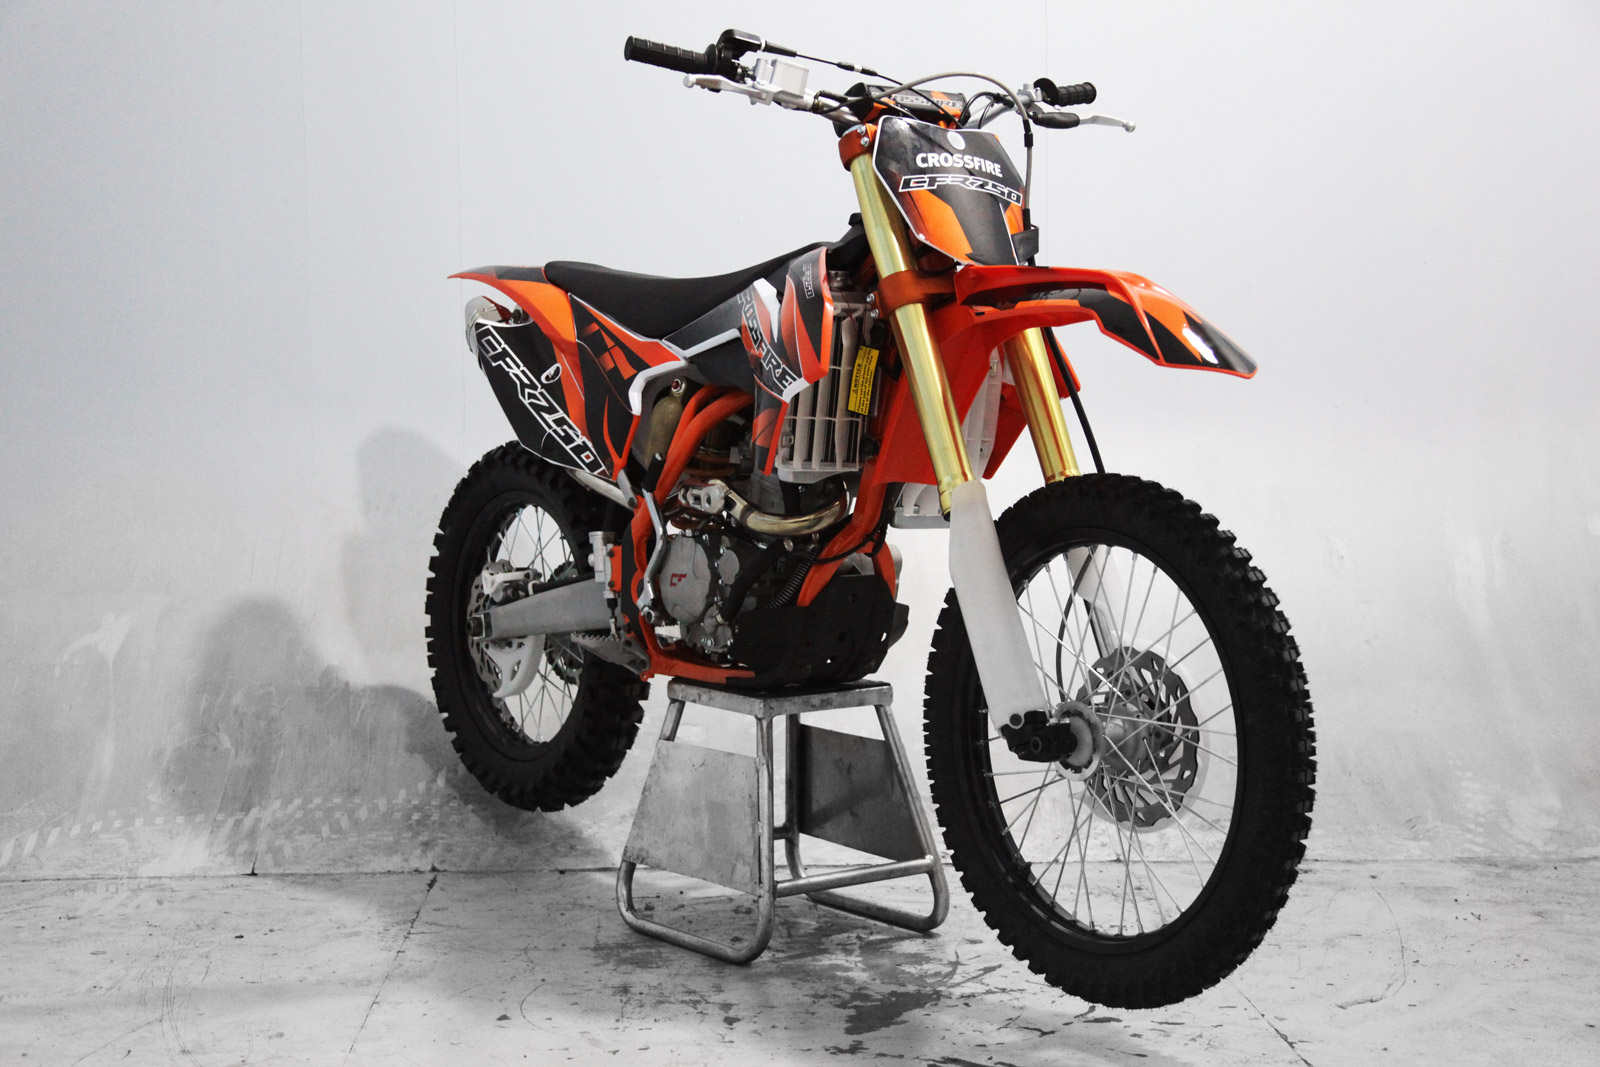 https://crossfiremotorcycles.com/wp/wp-content/uploads/2015/04/crossfire-motorbike-motorcycle-dirt-bike-cfr250-250cc-orange-dba.jpg